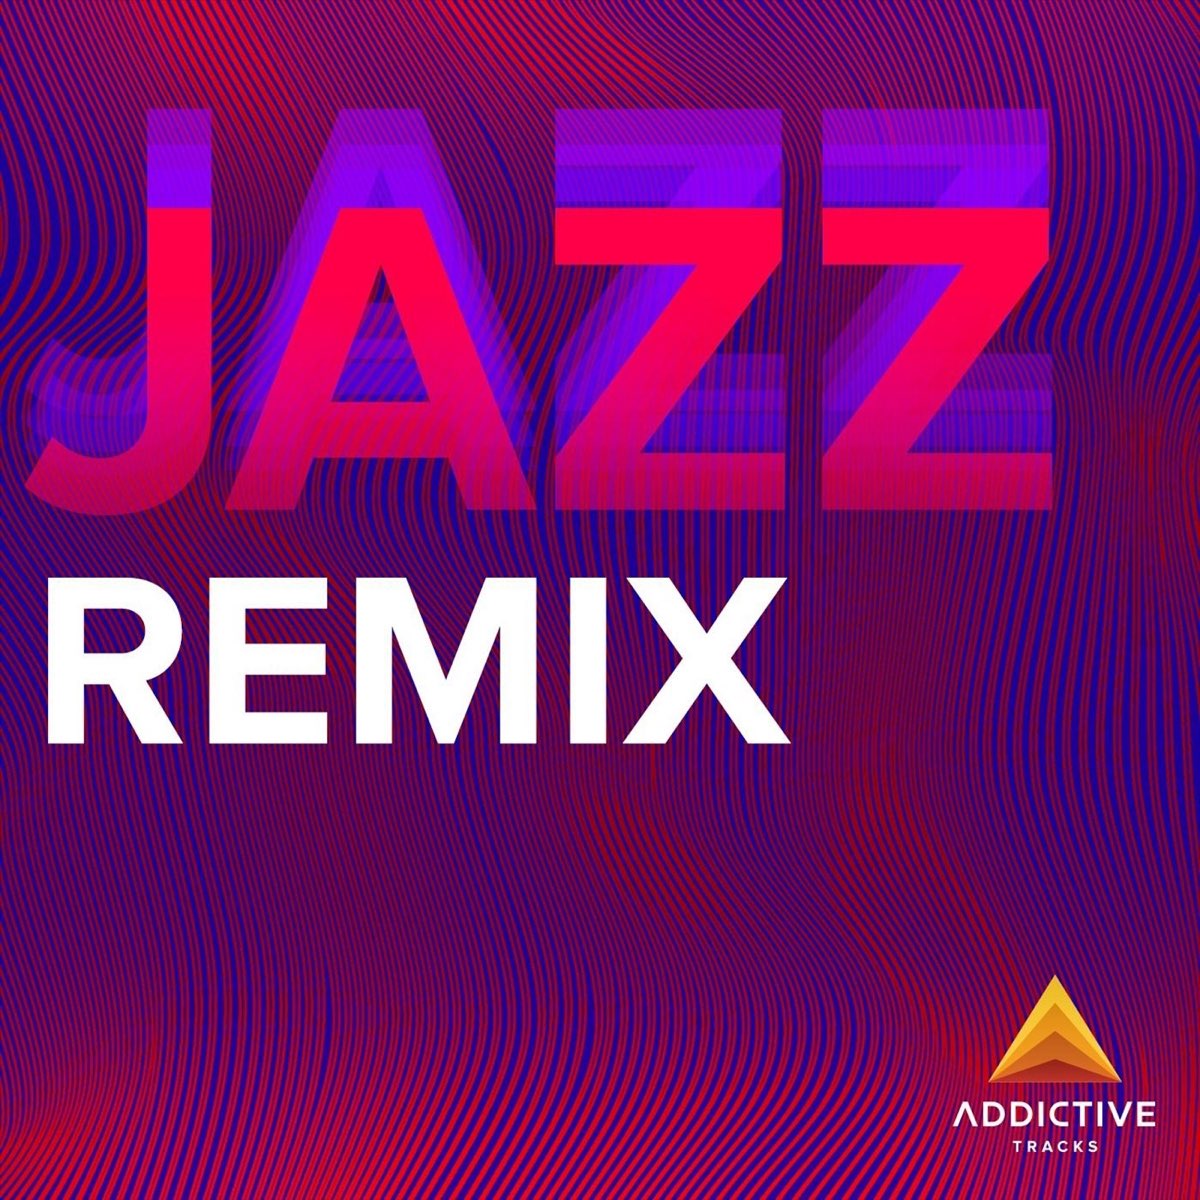 Jazz remixes